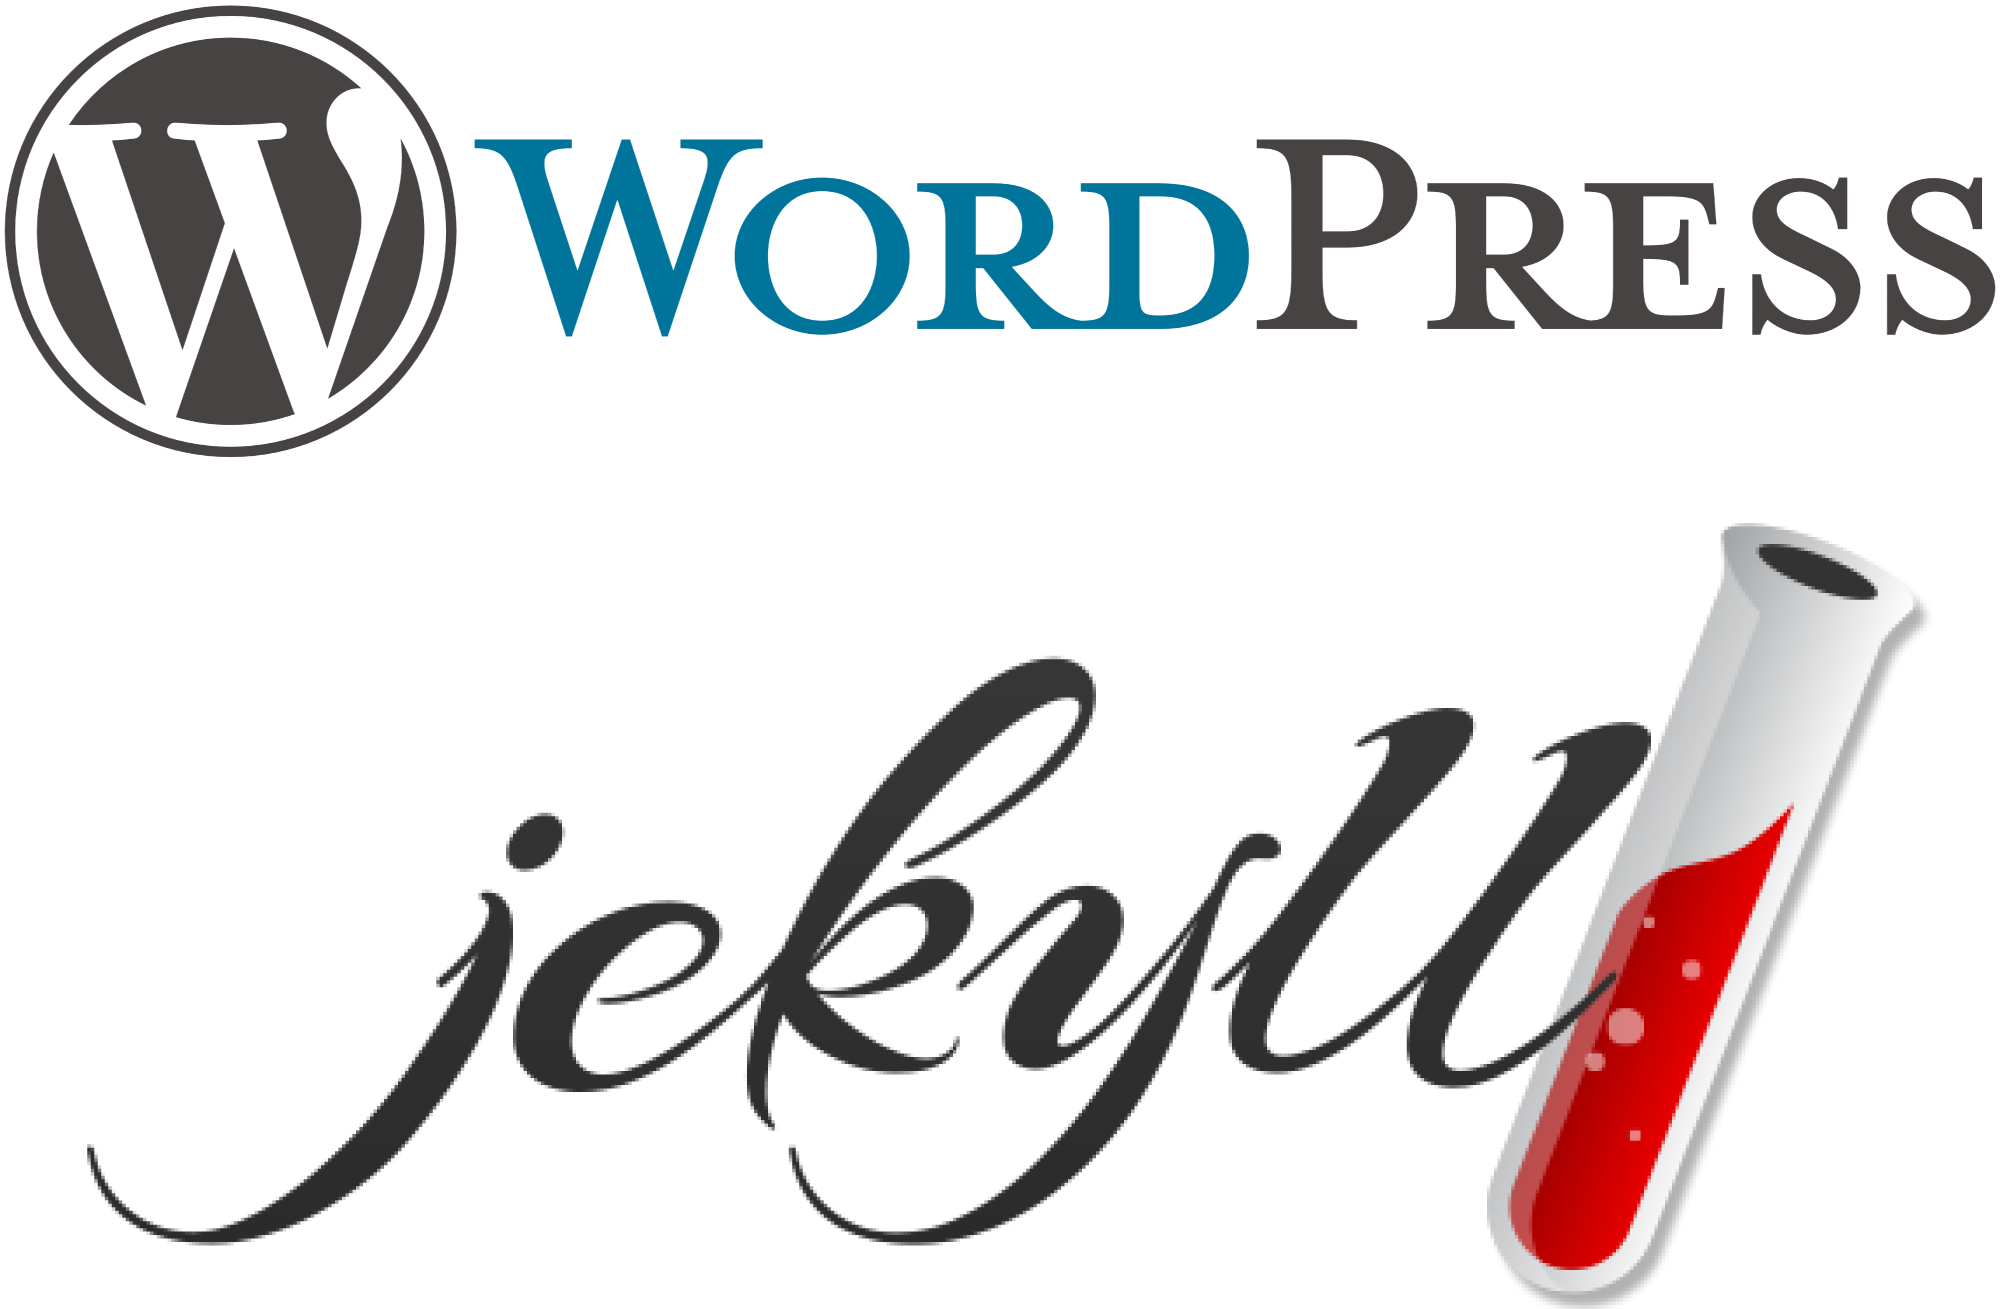 WordPress to Jekyll Test